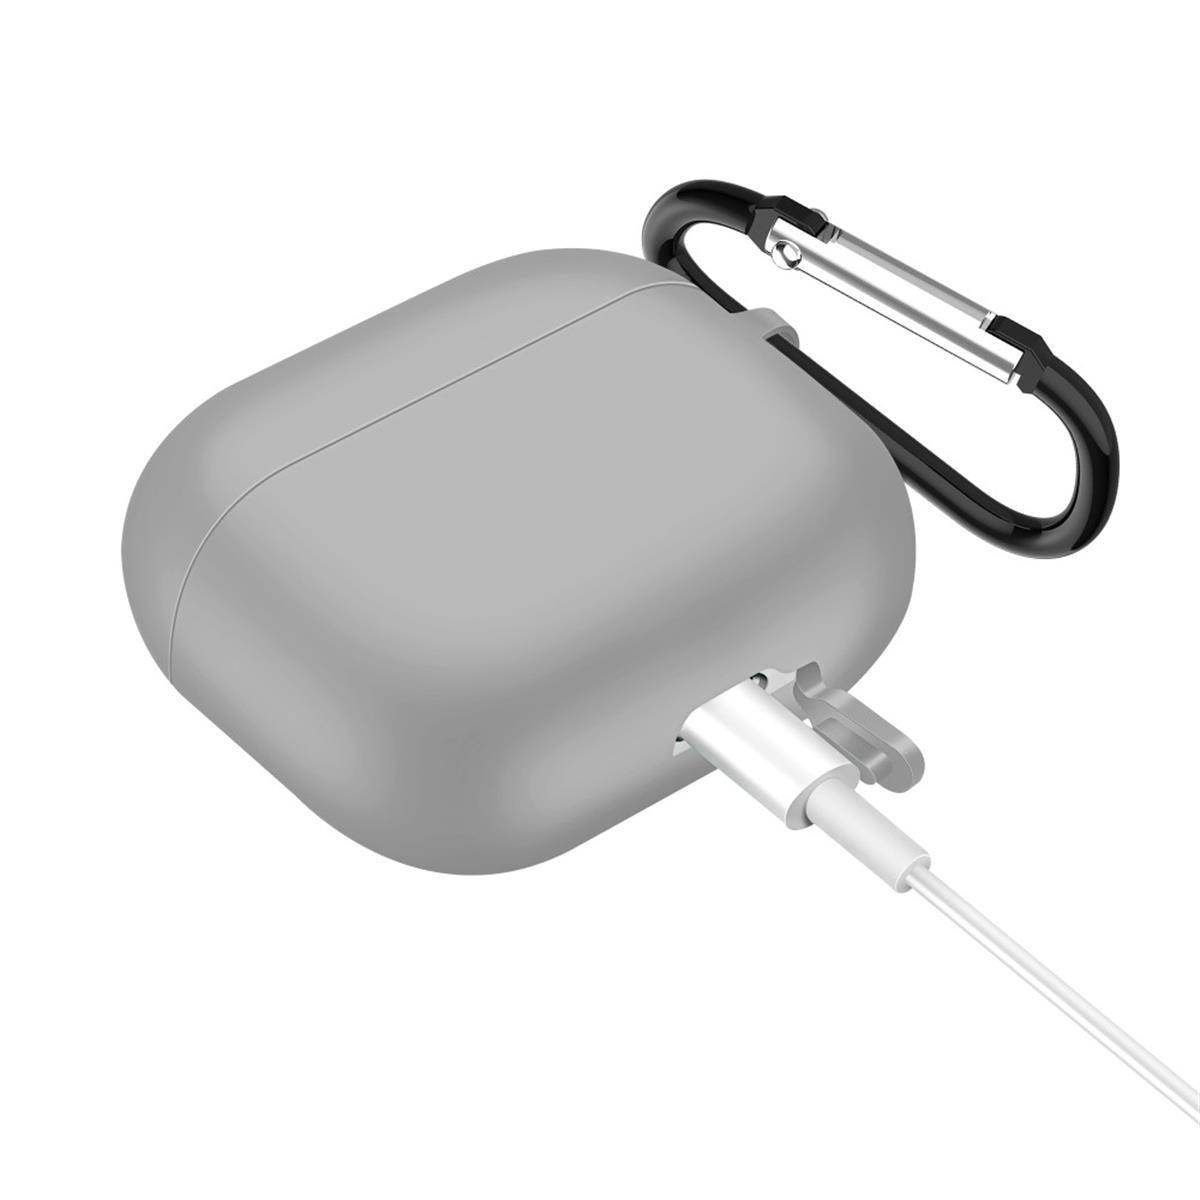 Hülle für Apple AirPods 3 Silikon Case Cover Etui Bumper Schutzhülle Tasche Grau